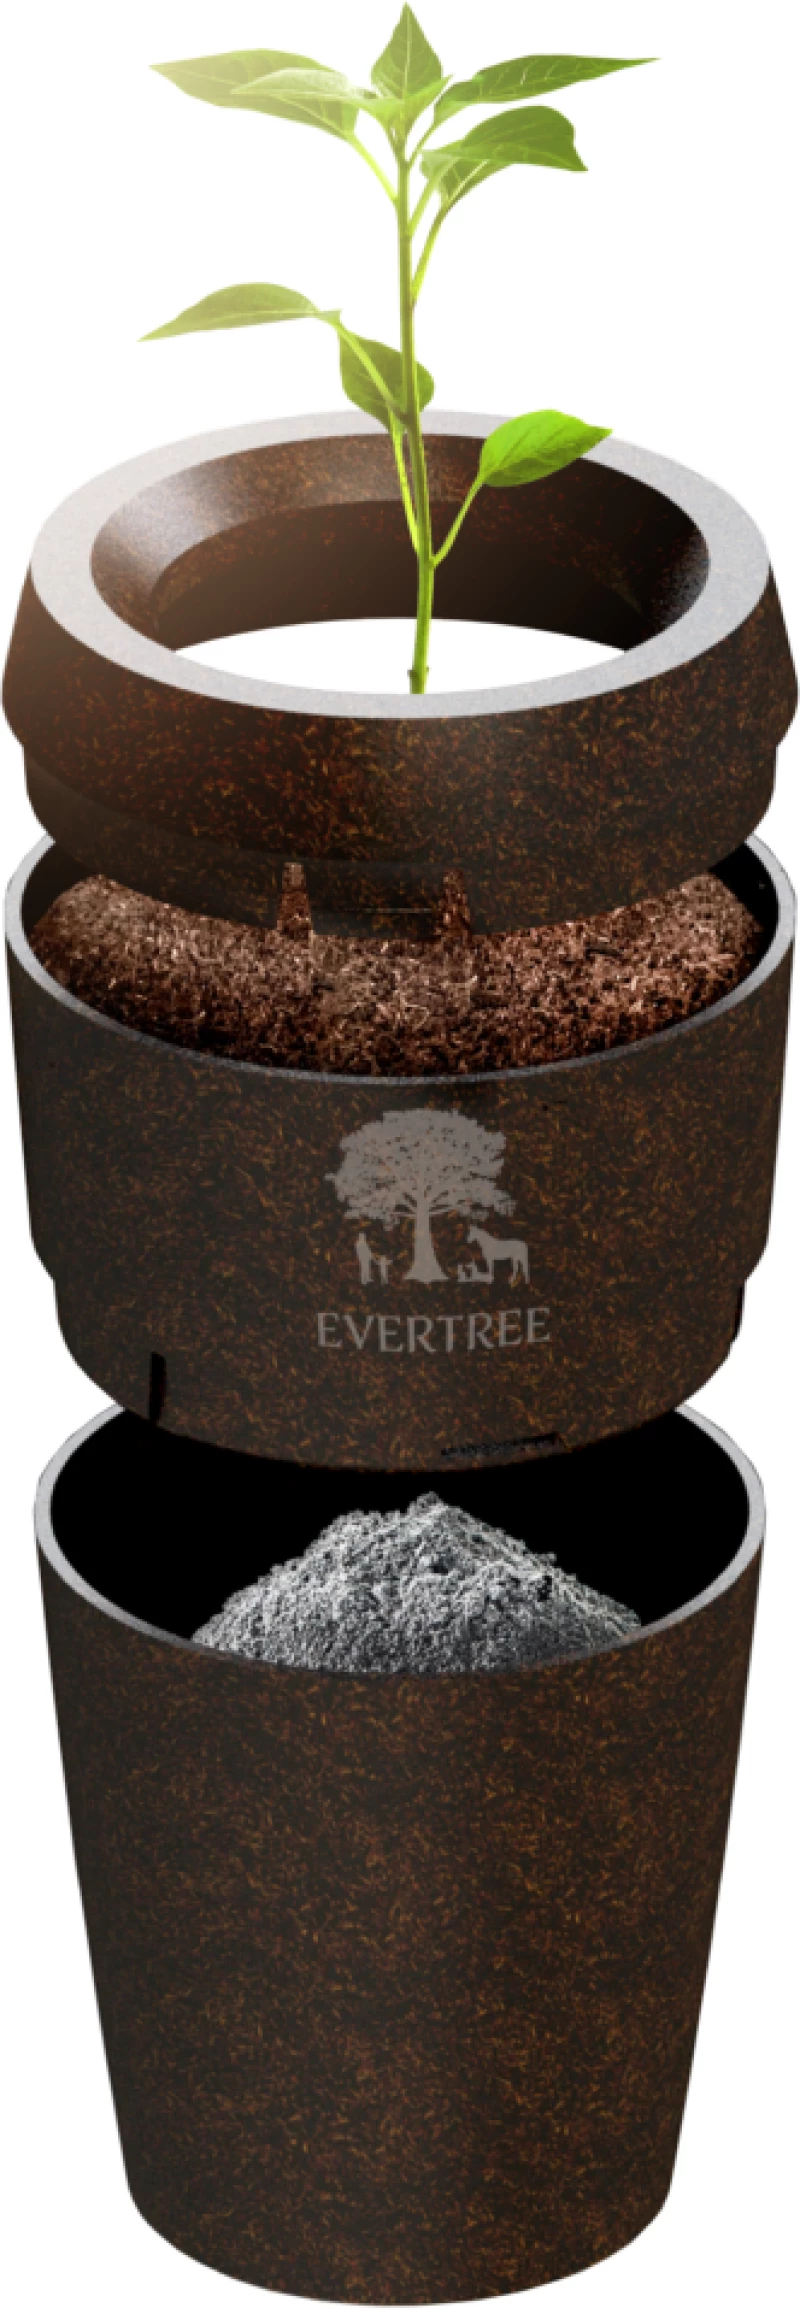 Evertree Urne Bestandteile